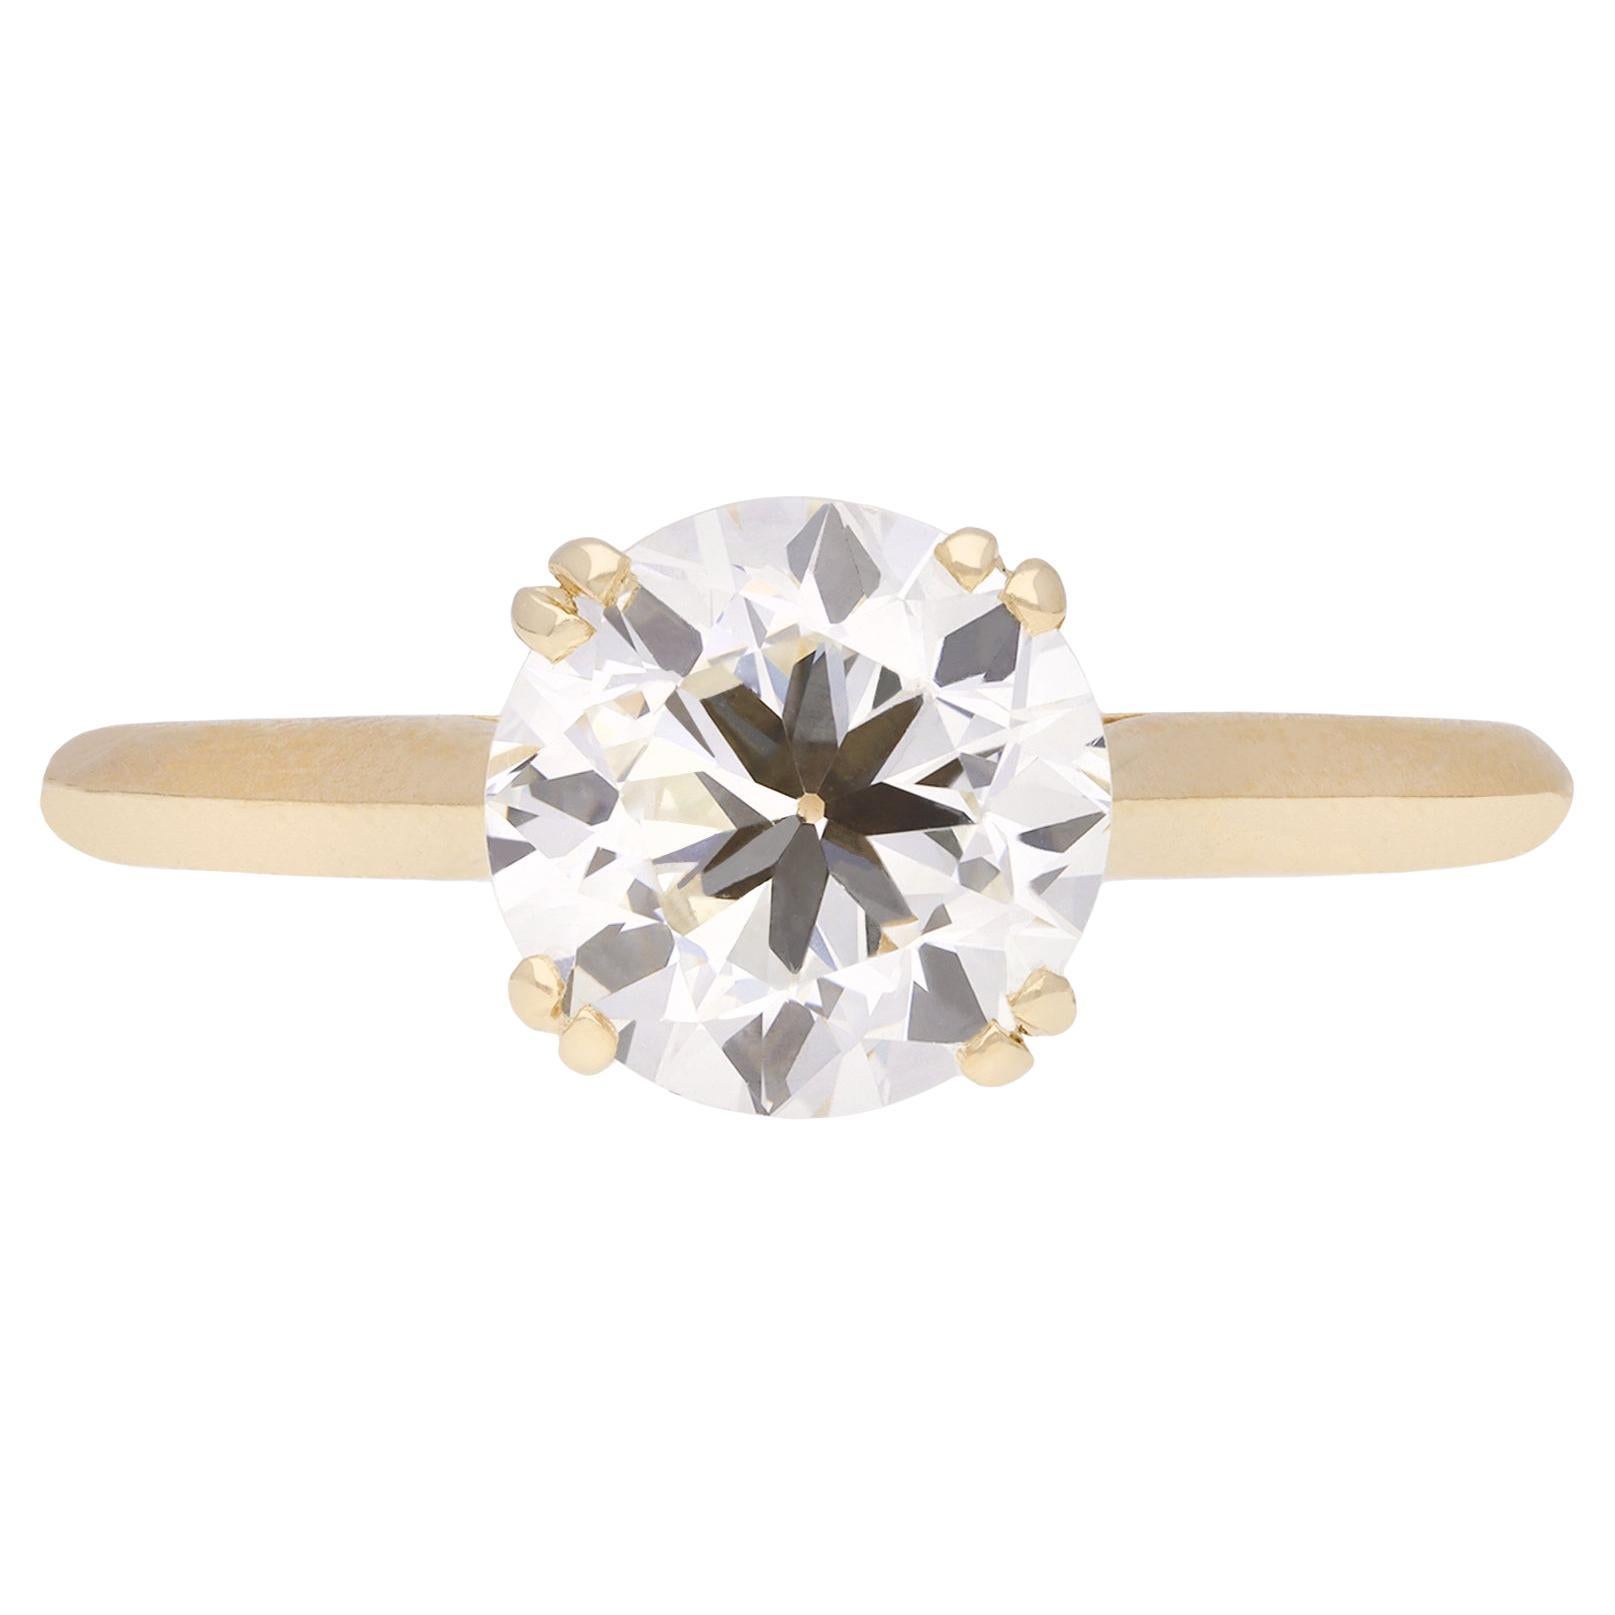 Boucheron 2.04 carat diamond engagement ring, French, circa 1960.